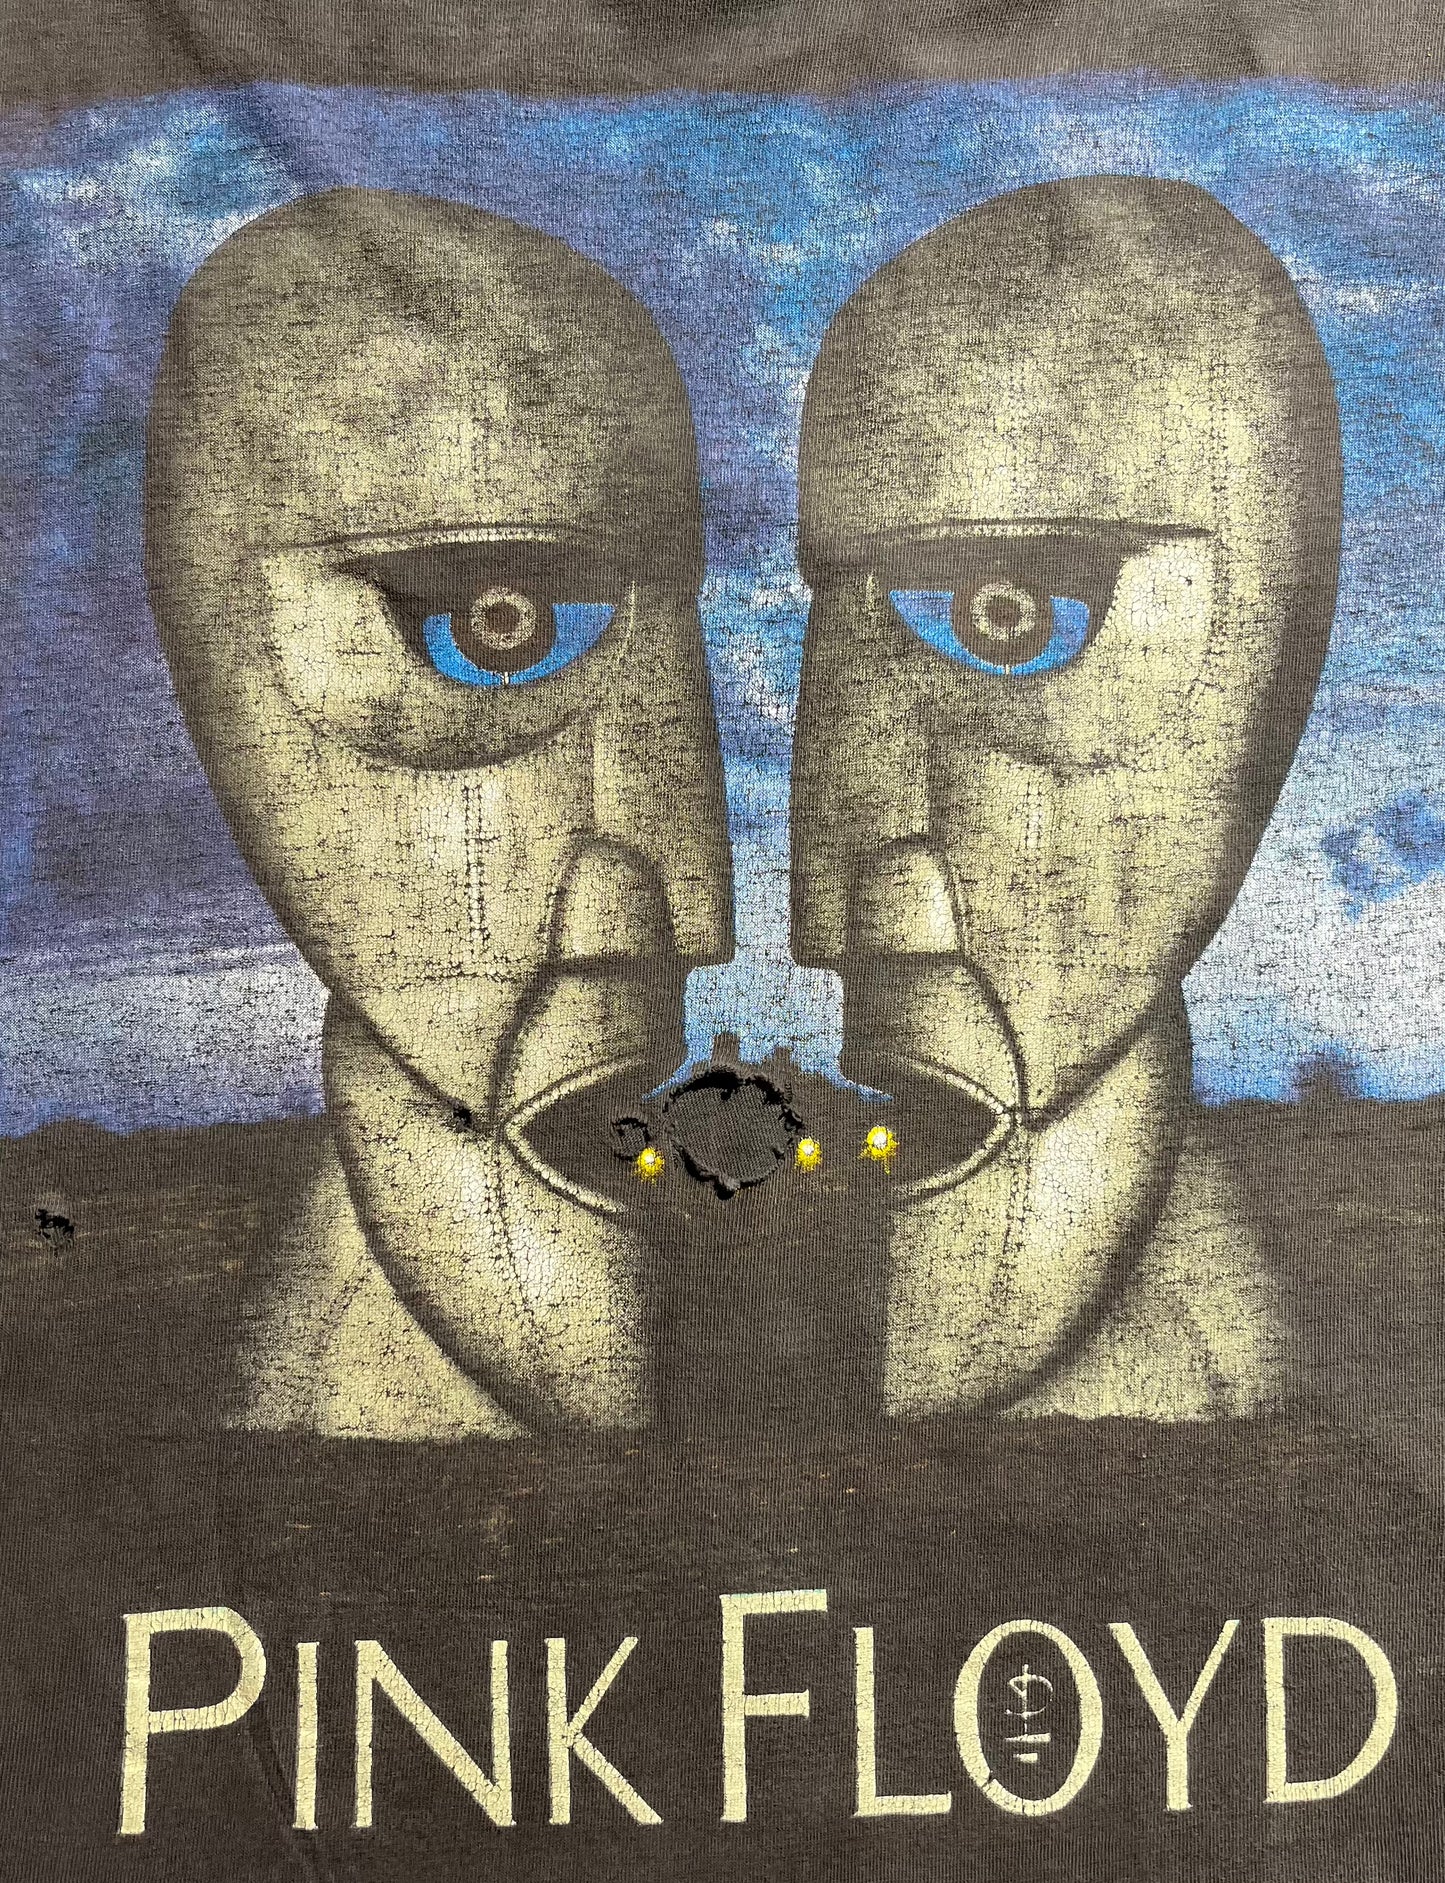 Distressed Grail Rare Vintage Pink Floyd 90s Band T-shirt North American Tour 1994 Black Tour Tee L